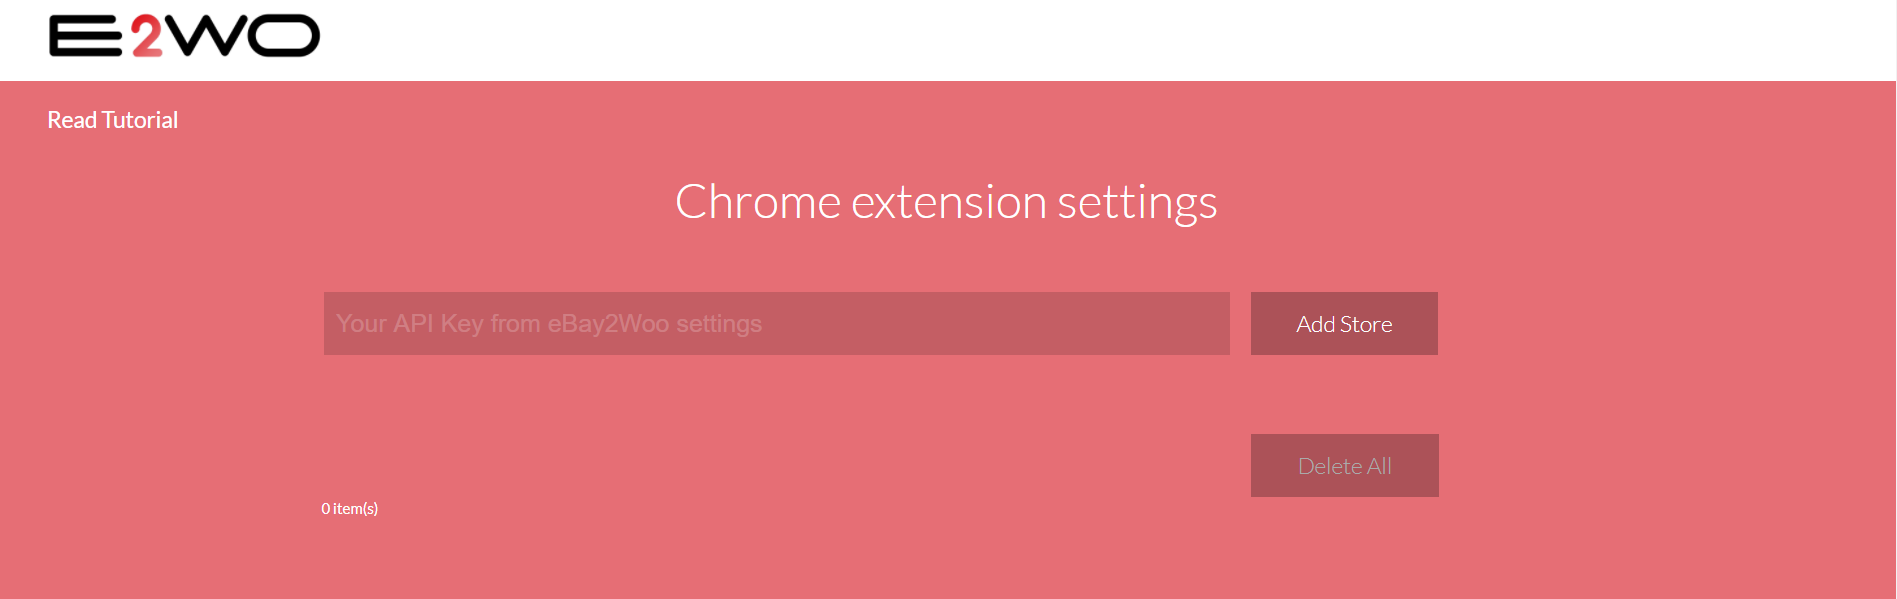 ebay-chrome-extension-options